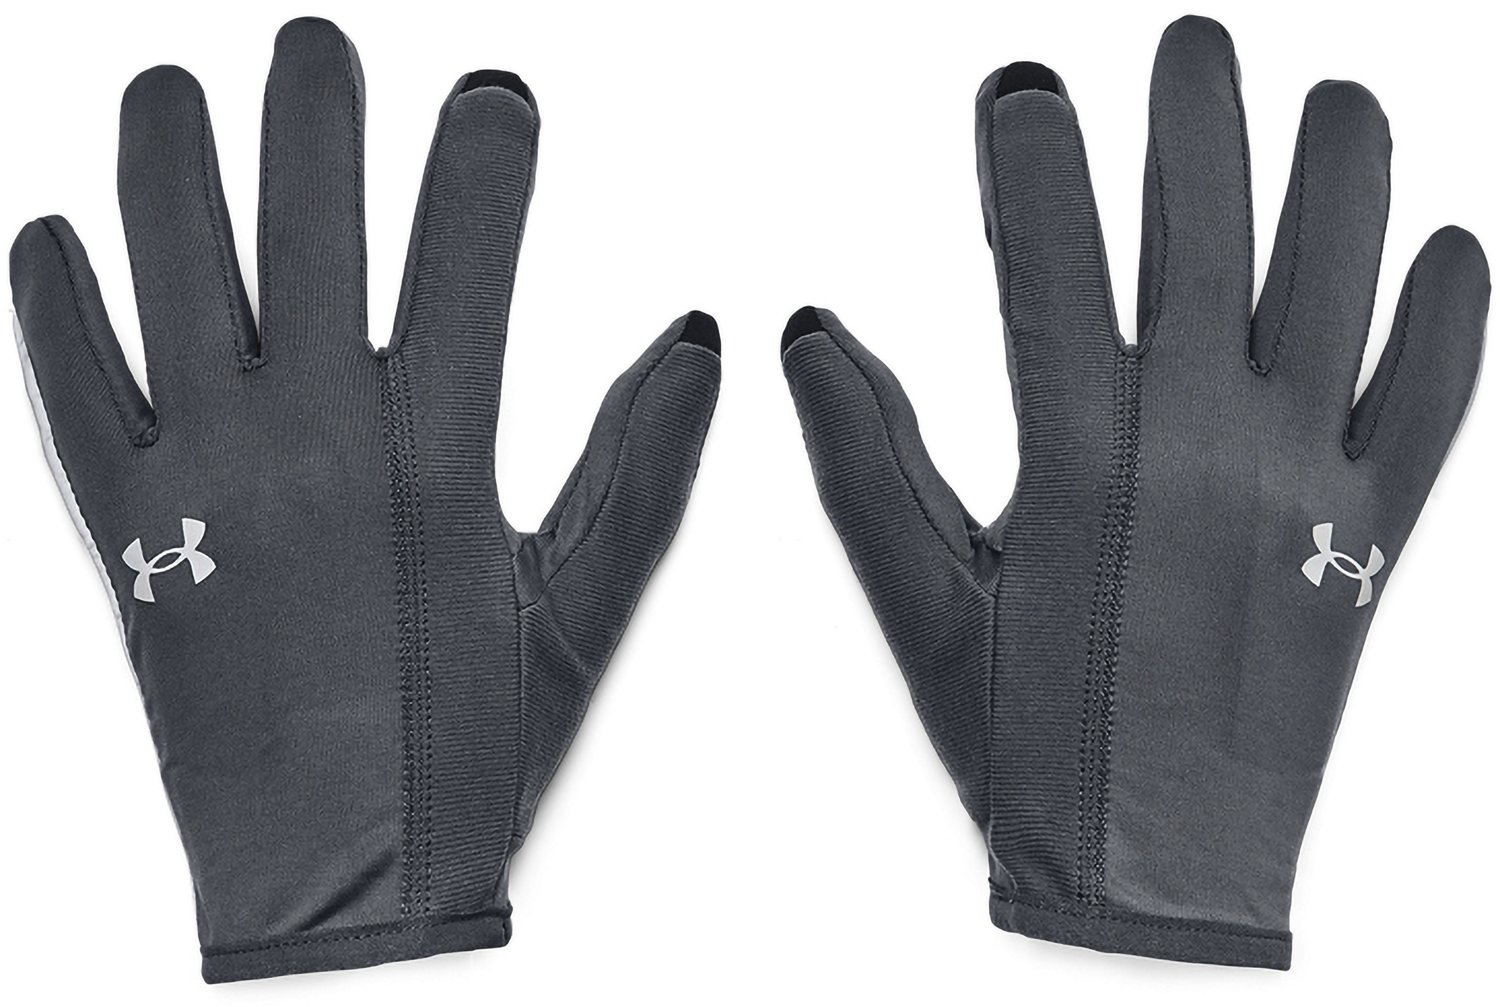 Under Armour Men's Storm Liner Gloves